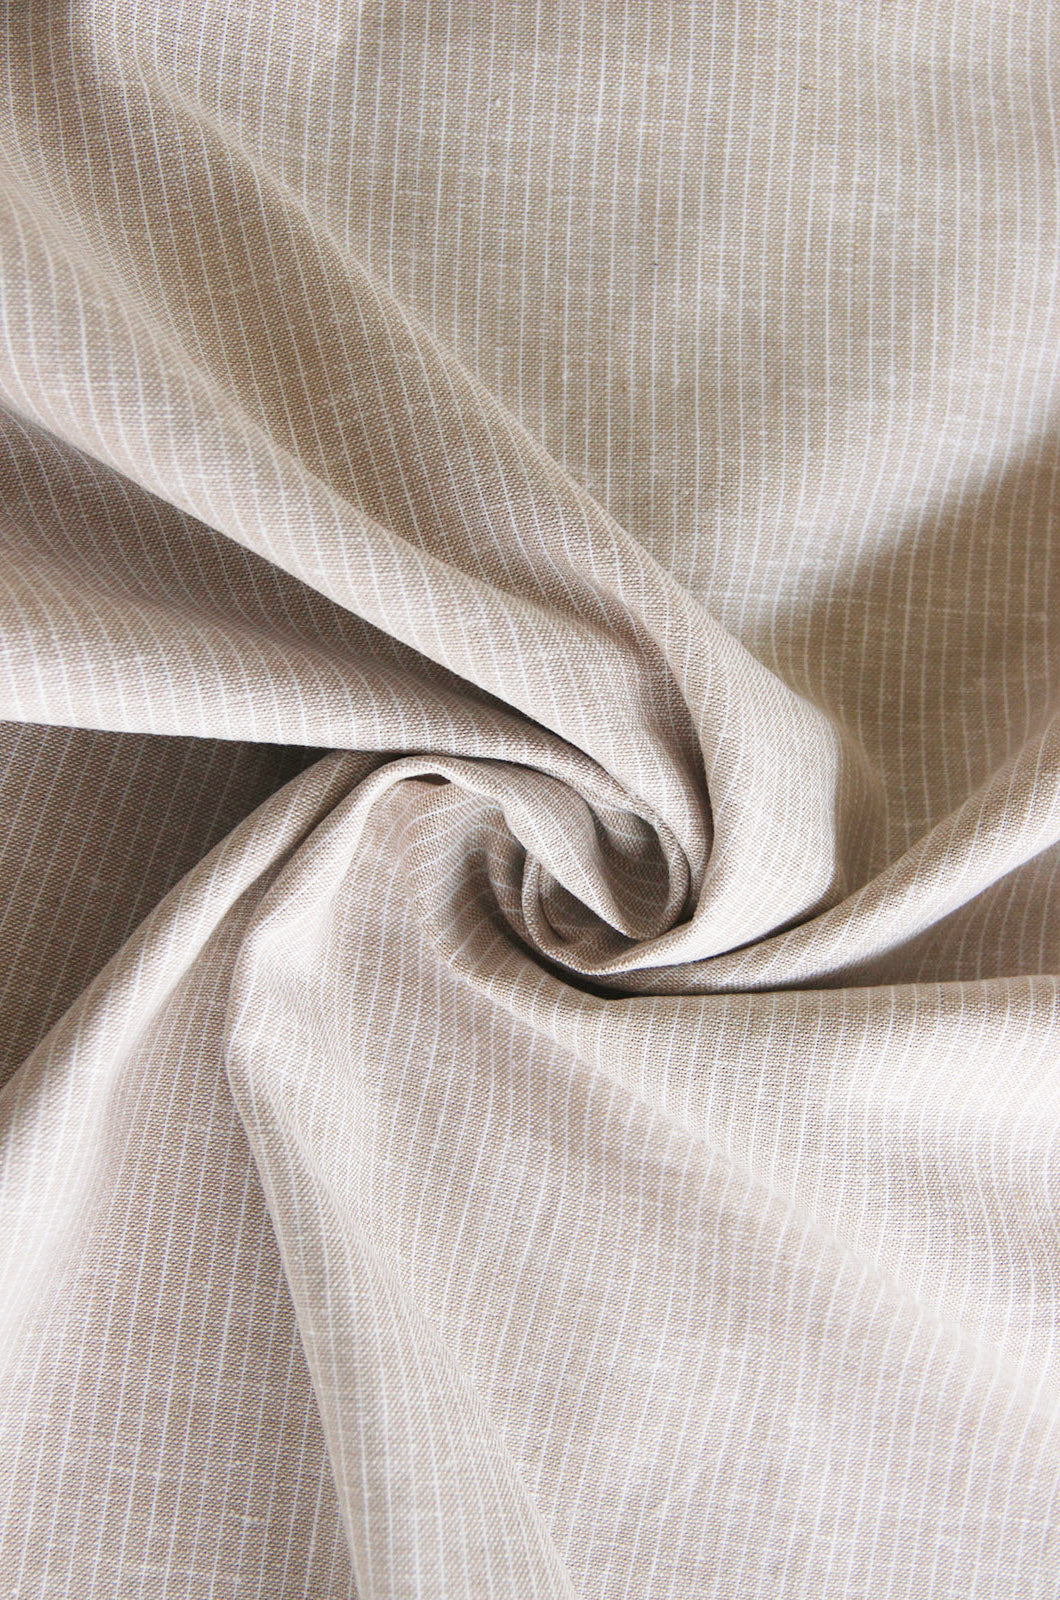 Buy 007-sand Half linen patterned fine stripes * From 50 cm